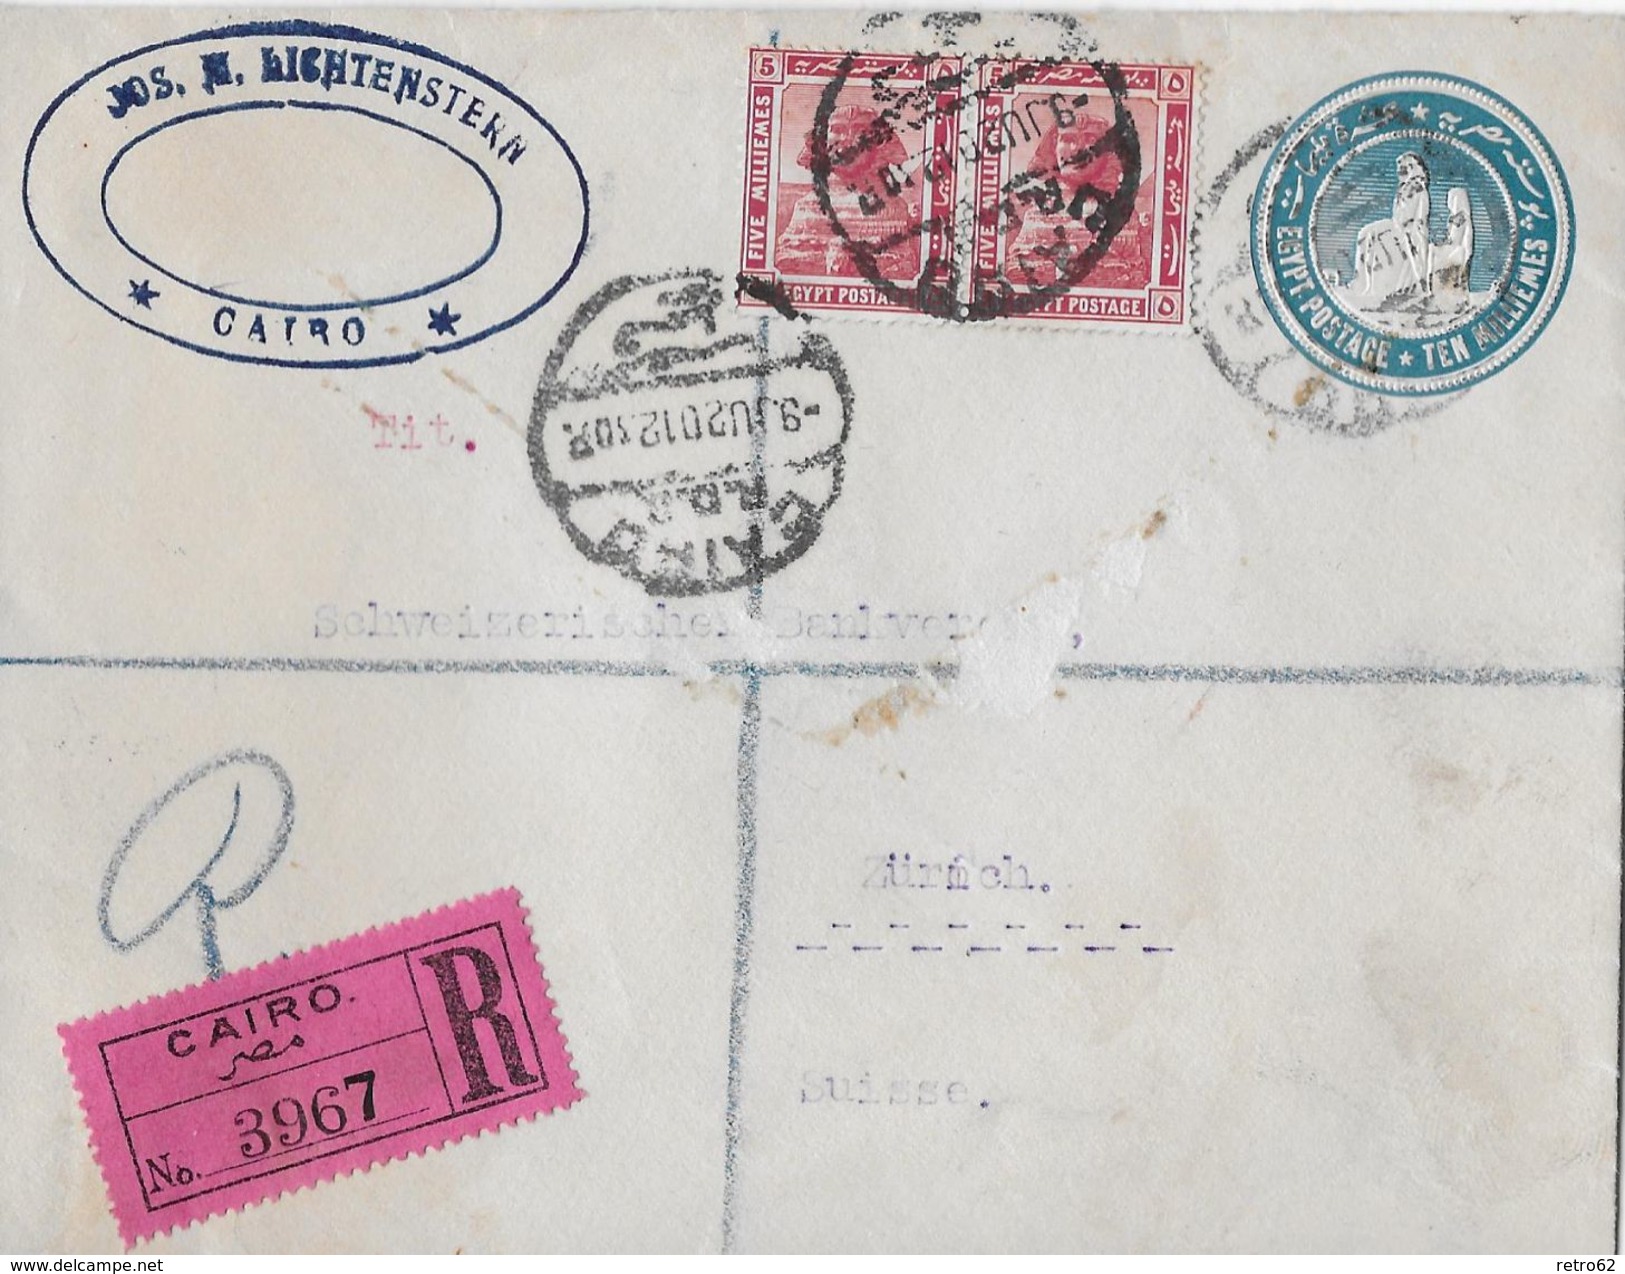 ÄGYPTEN / EGYPT POSTAGE 1920 - R-Letter With Additional Franking From Cairo To Suisse - 1915-1921 Britischer Schutzstaat